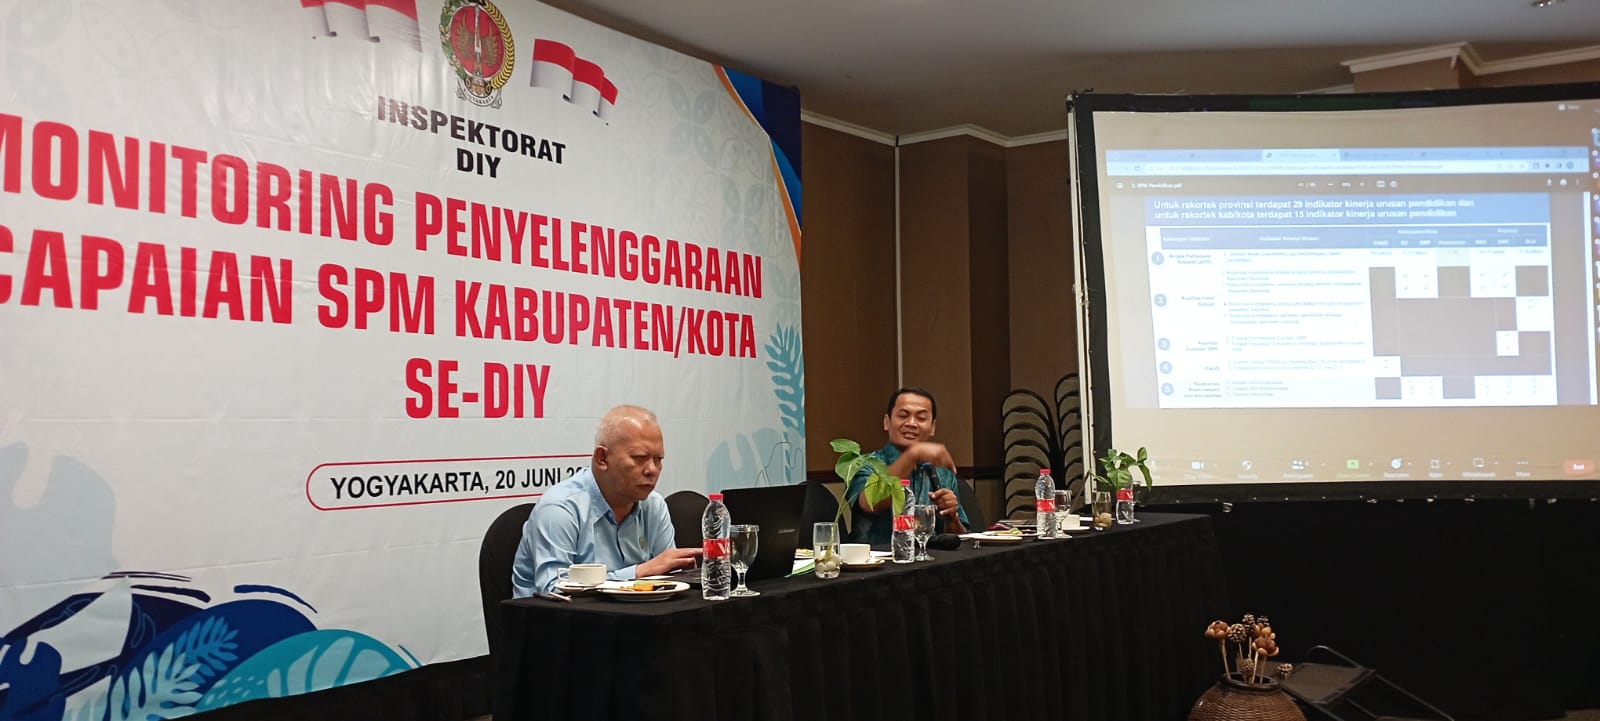 Monitoring Penyelenggaraan Capaian SPM Kabupaten/Kota Se-DIY